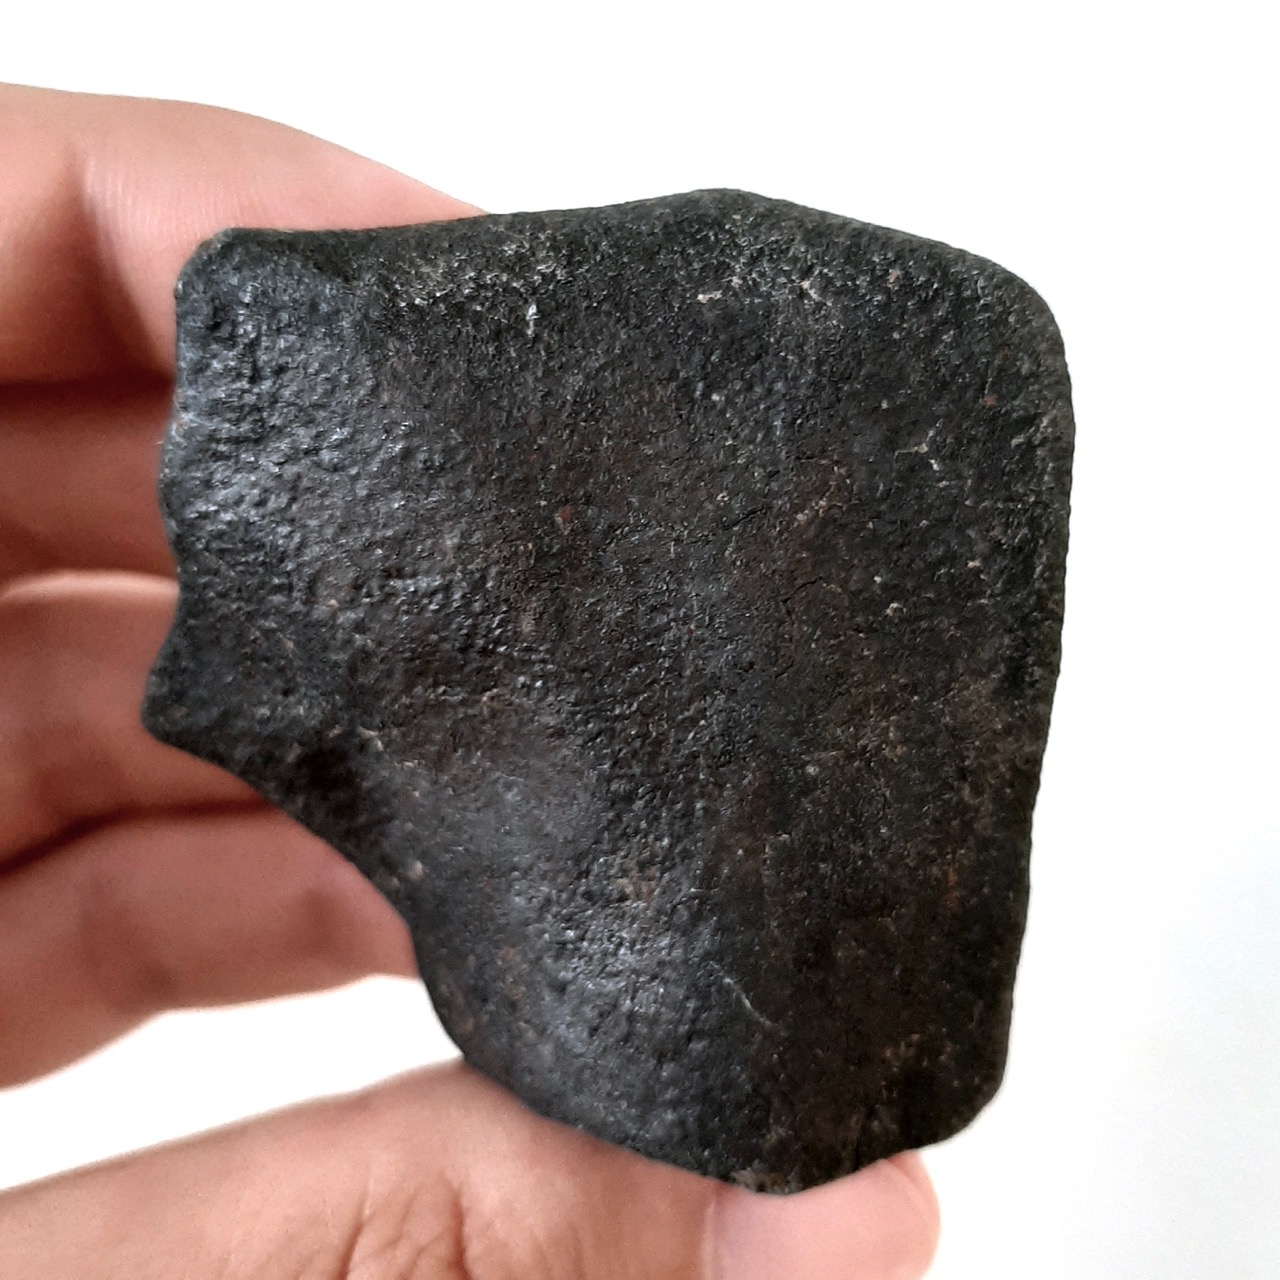 Juancheng meteorite. 100% crust and oriented.